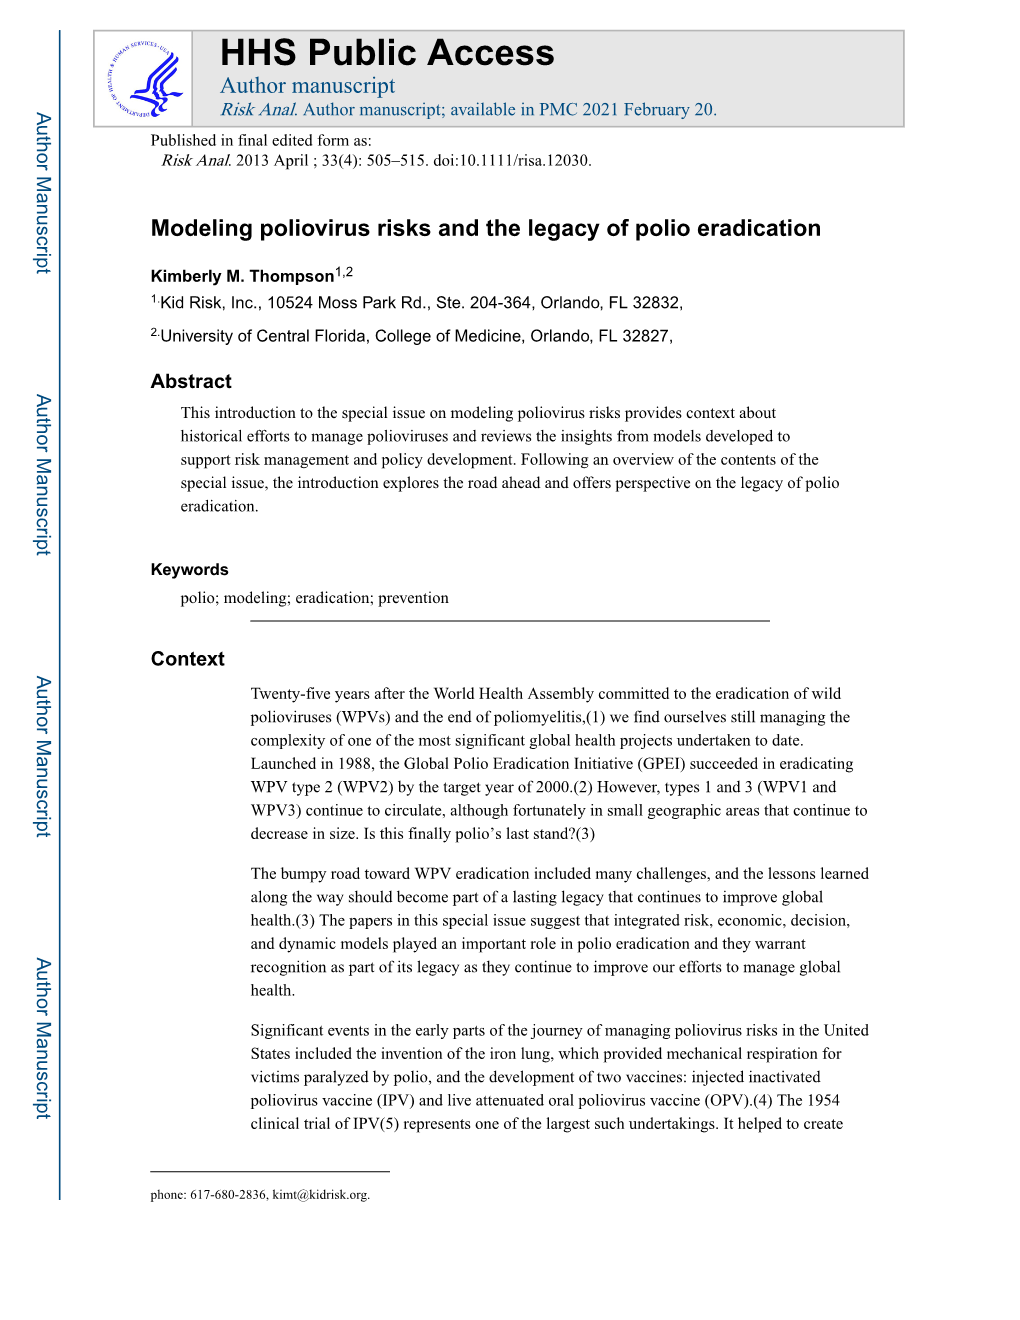 Modeling Poliovirus Risks and the Legacy of Polio Eradication